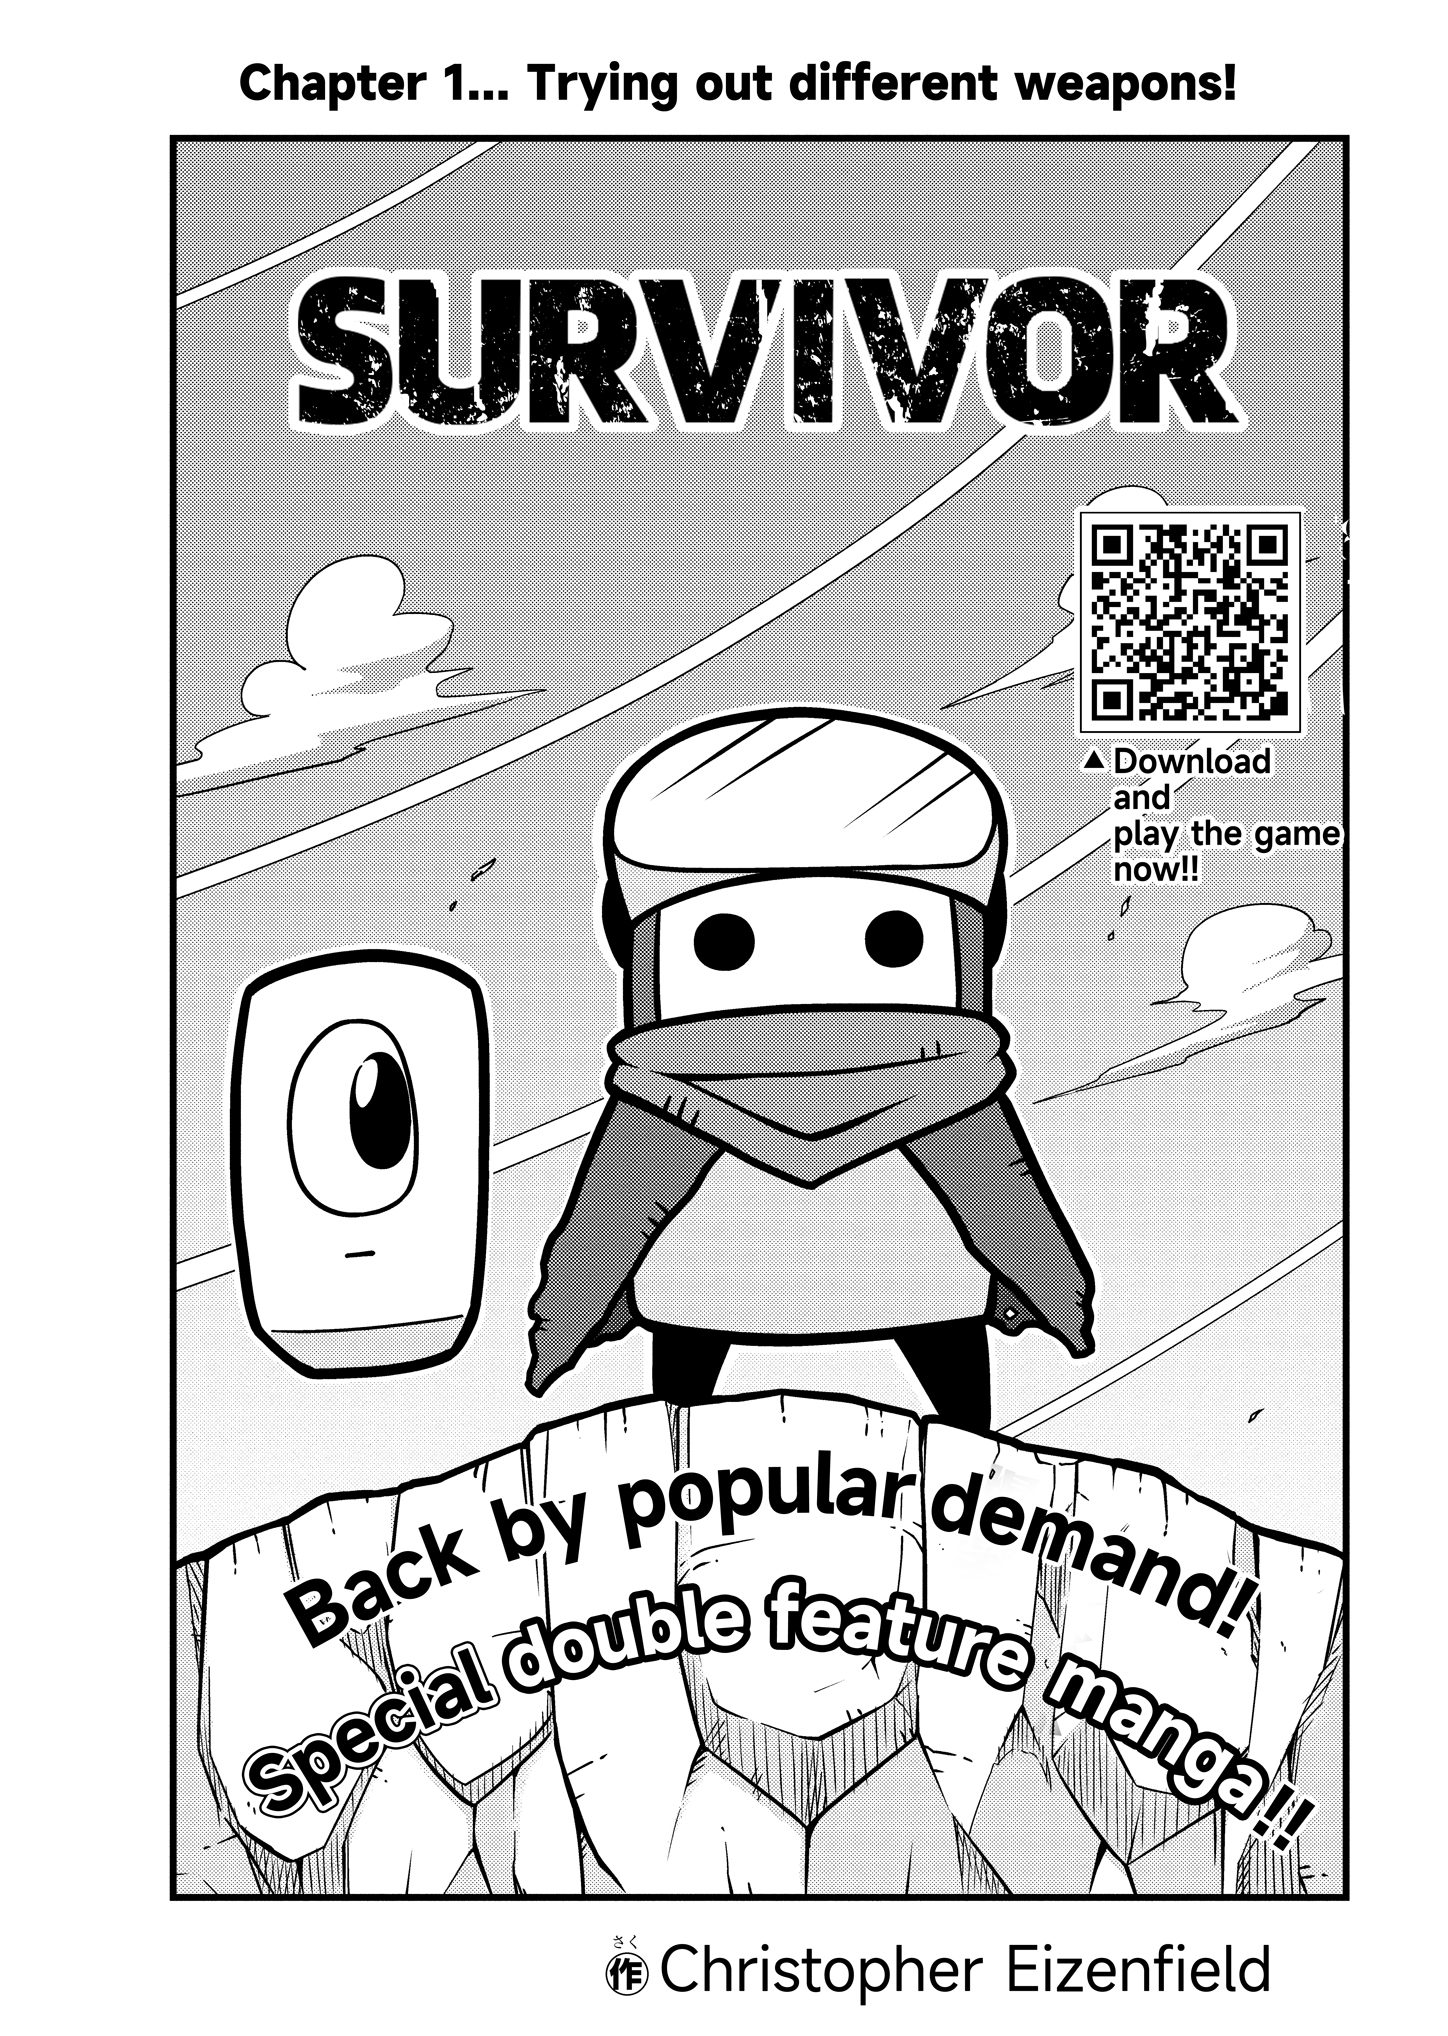 Survivor.io Chapter 9 Boss Gameplay